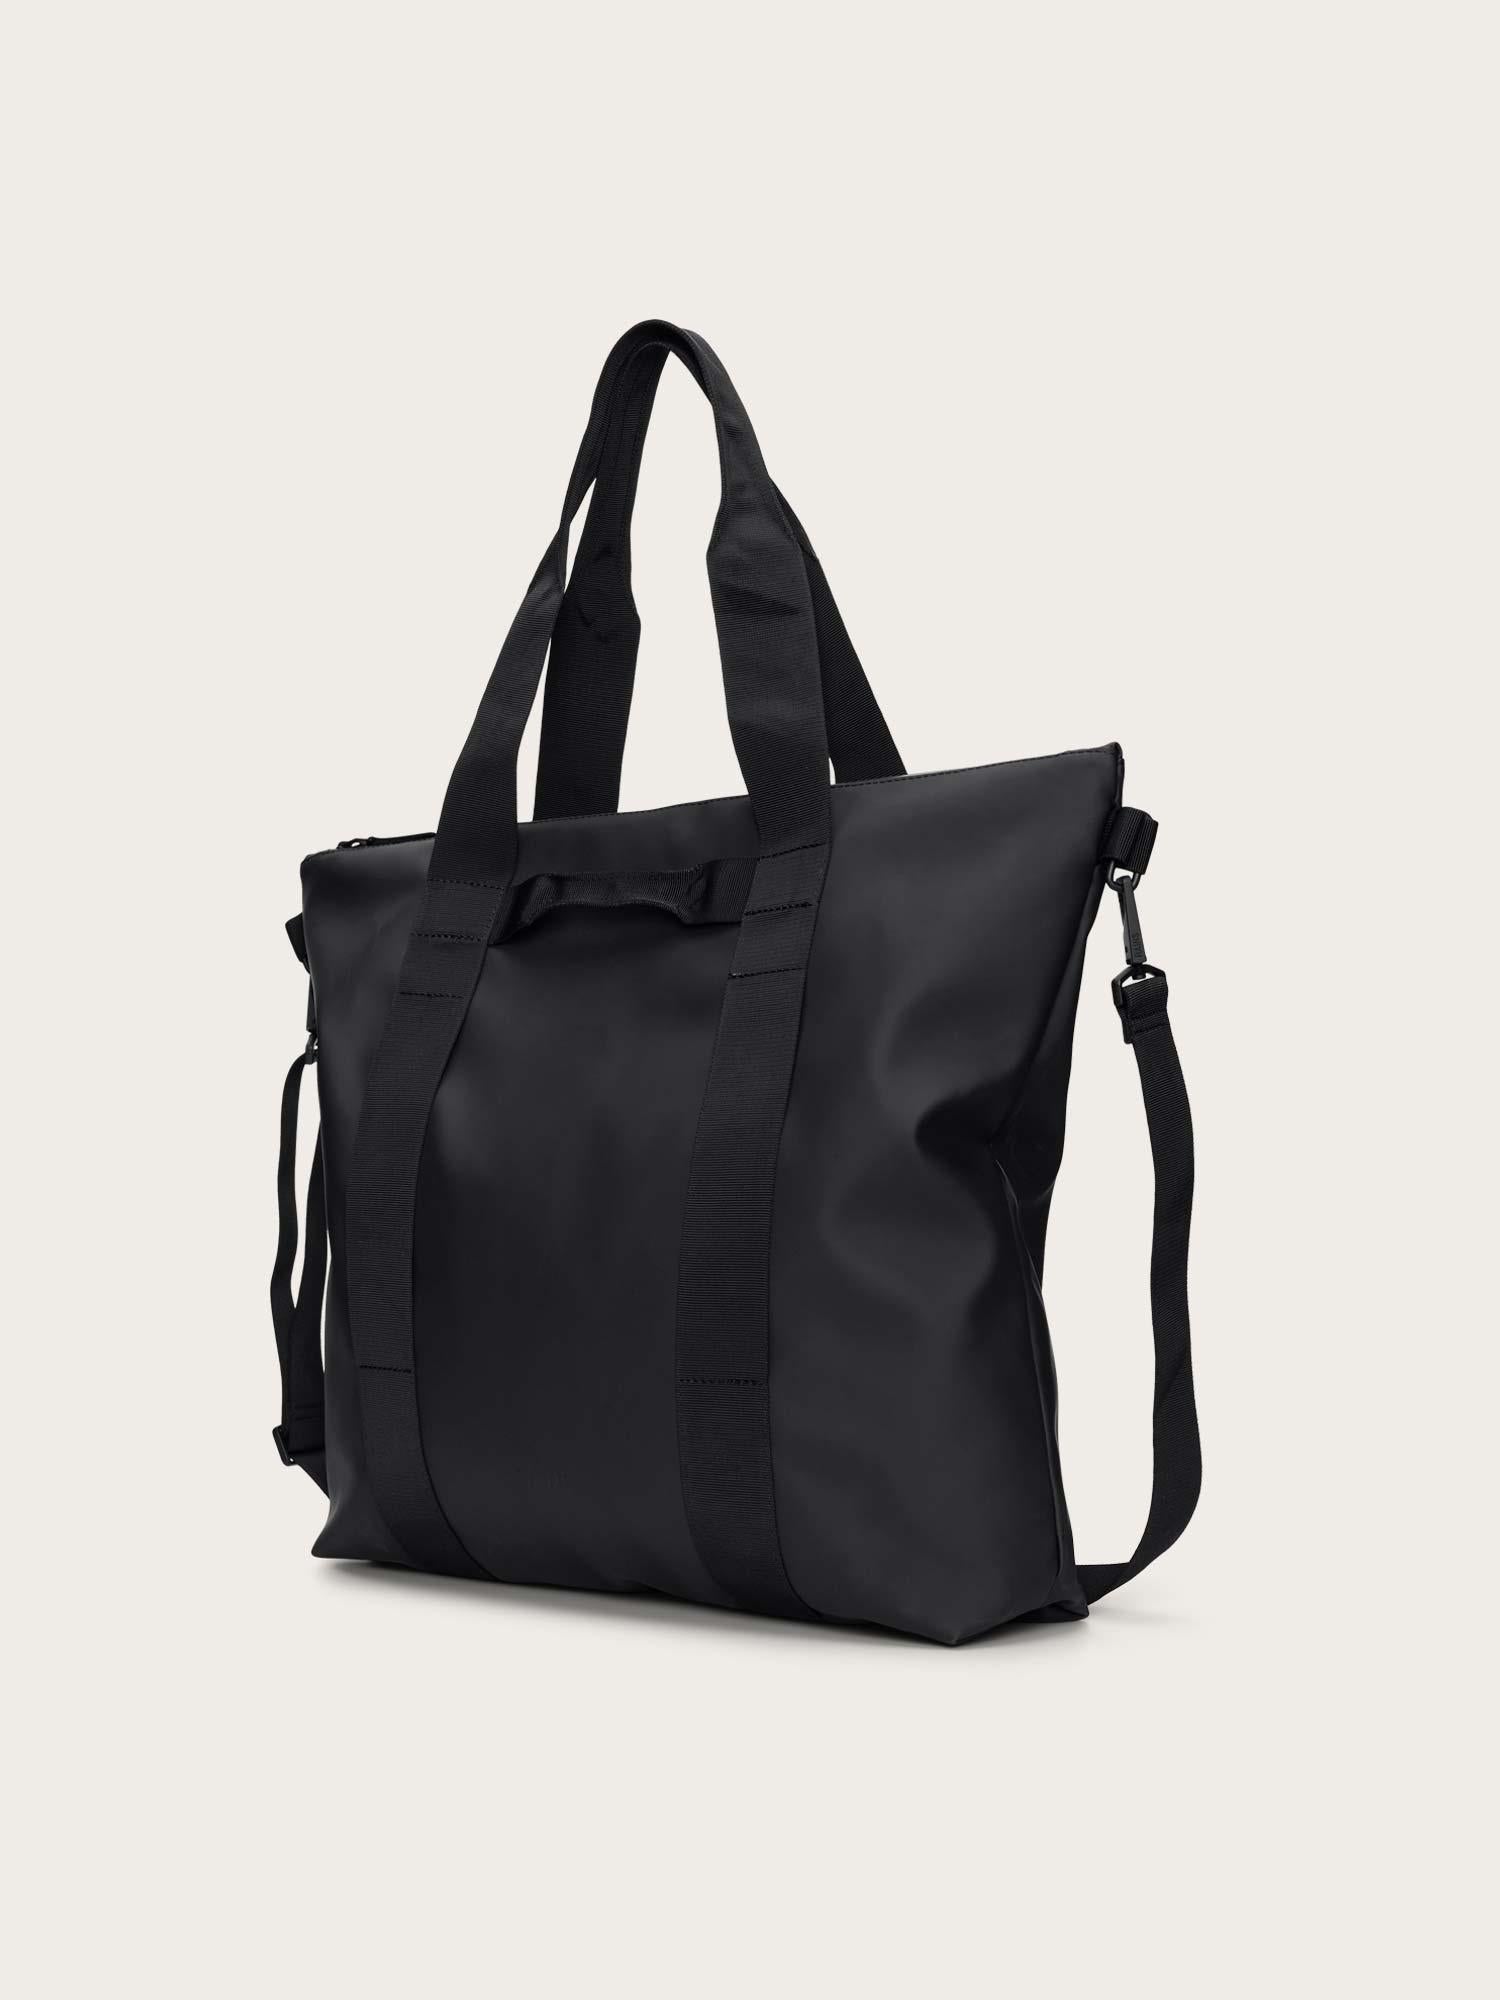 Tote Bag W3 - Black